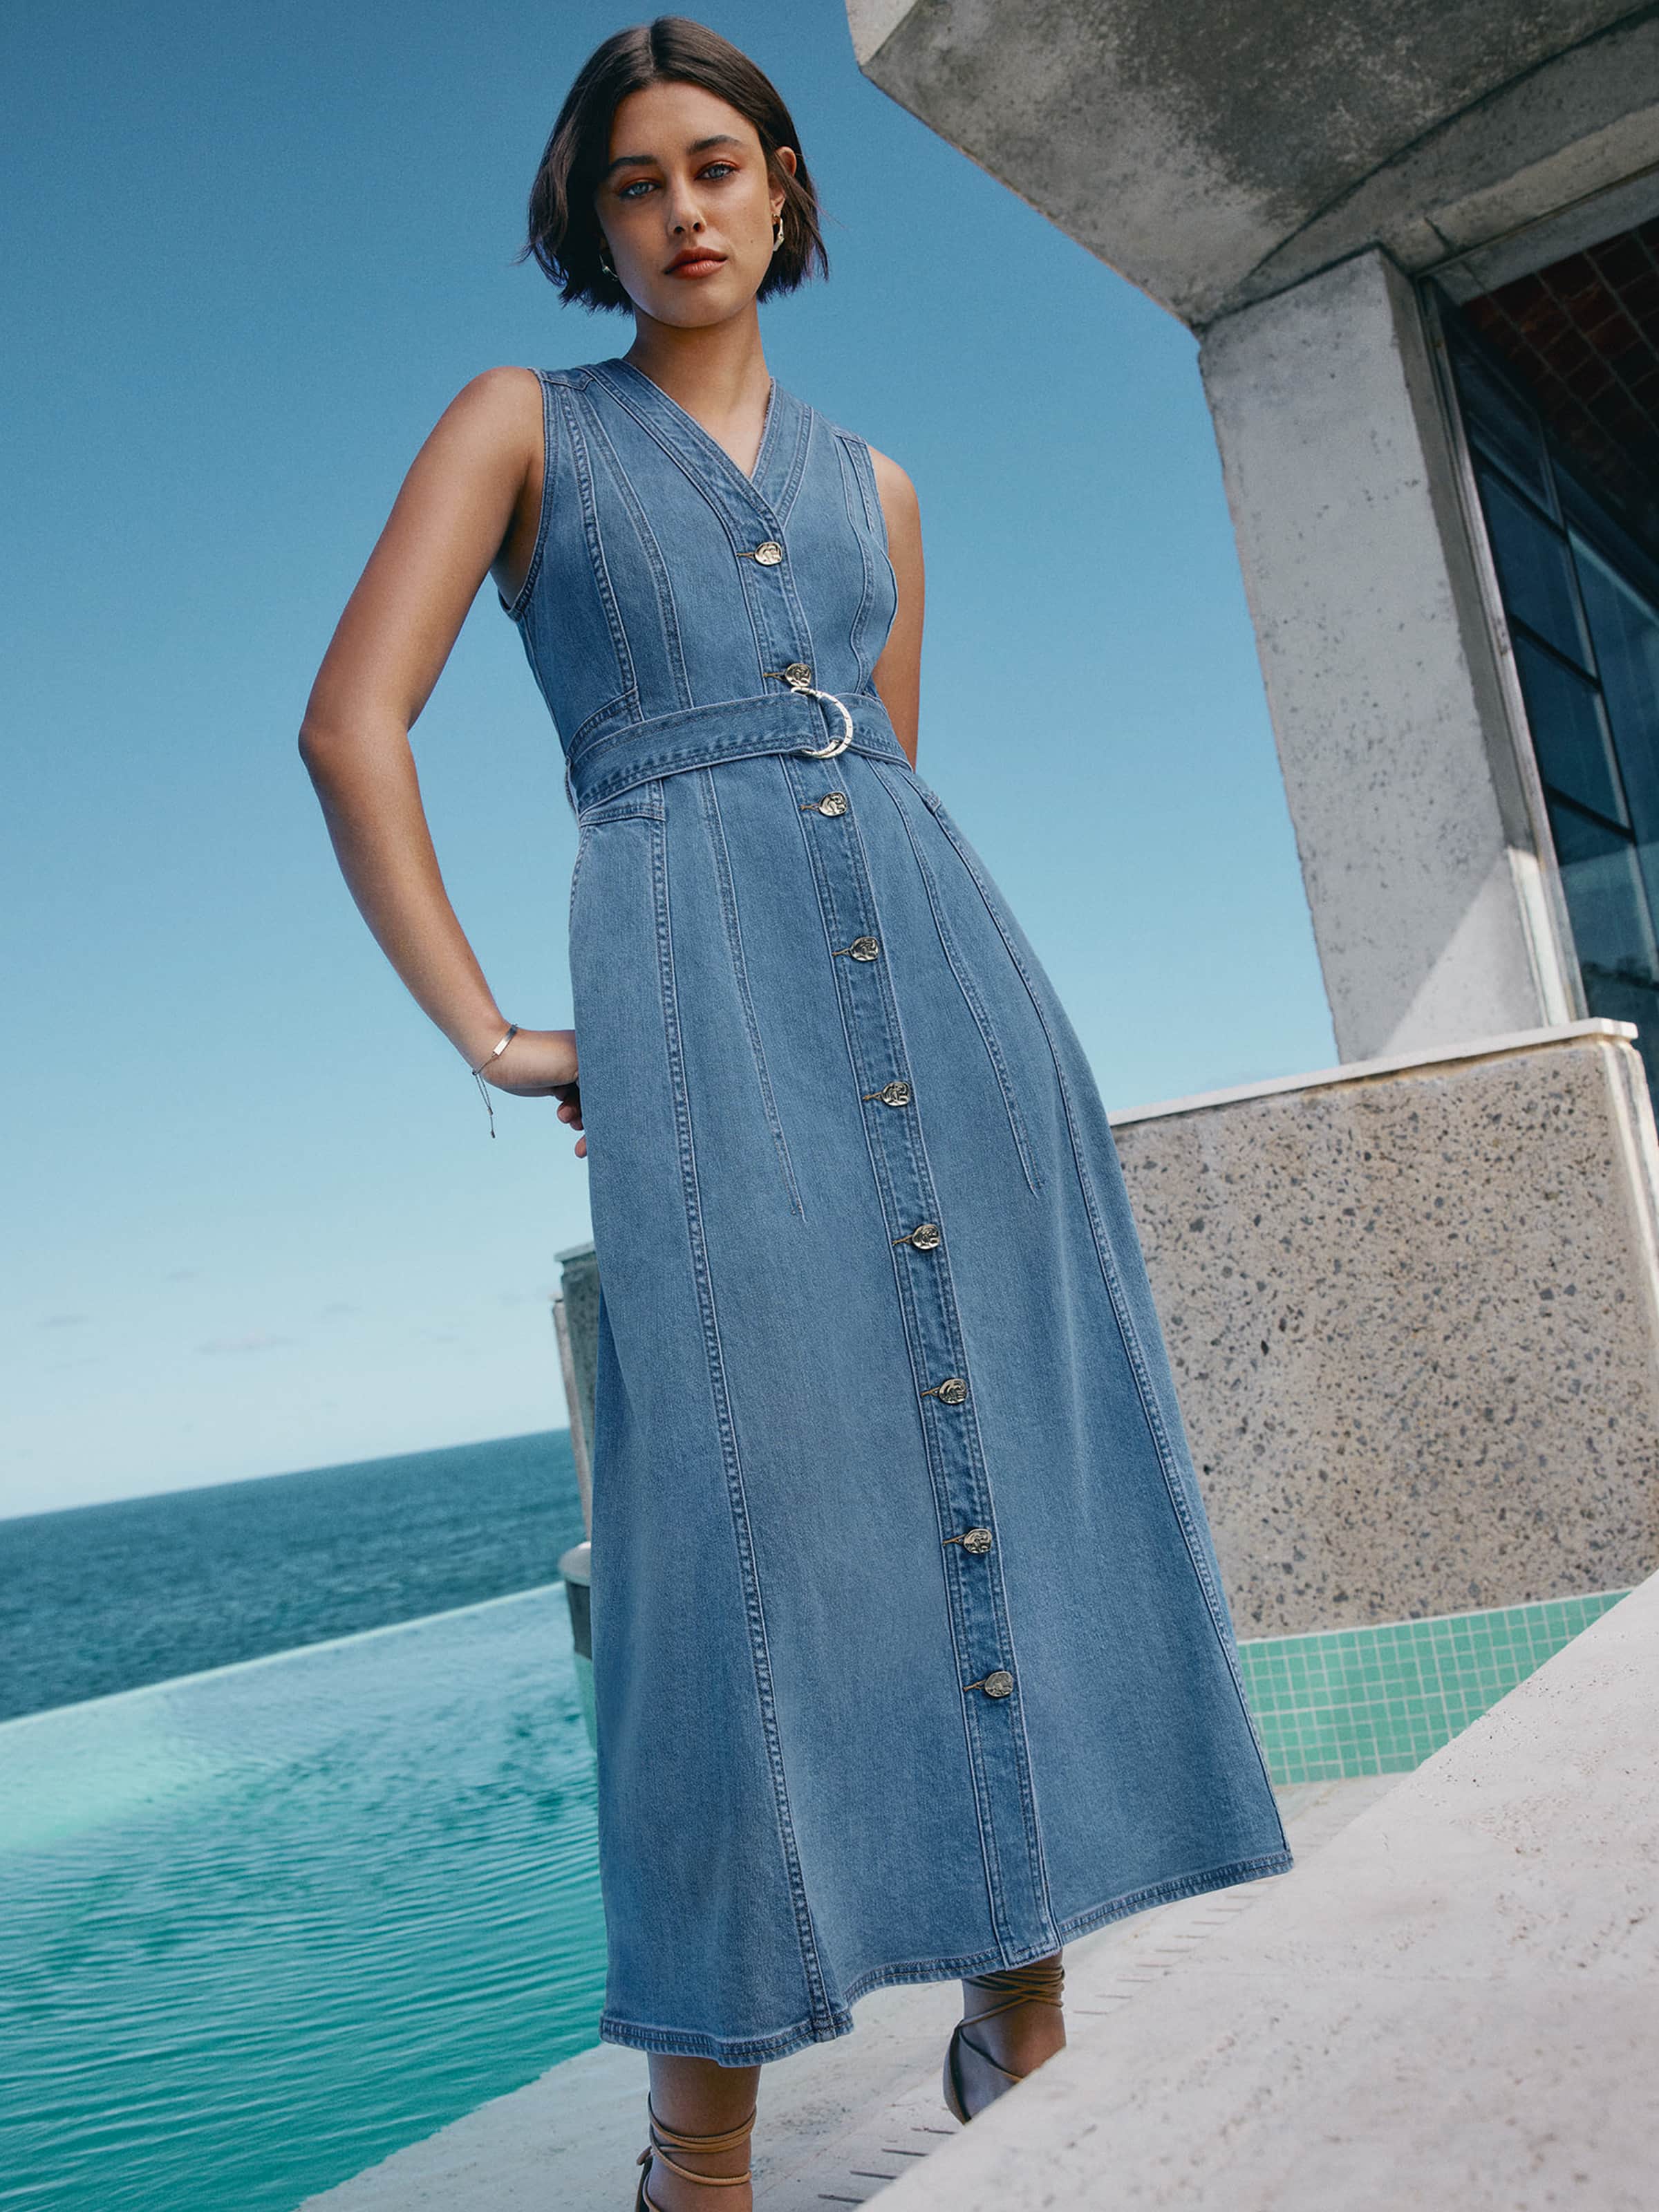 Buy GLAMODA Women A-Line Denim Stylish Long Maxi Dress for Women and Girls  (Small, Light Blue) at Amazon.in